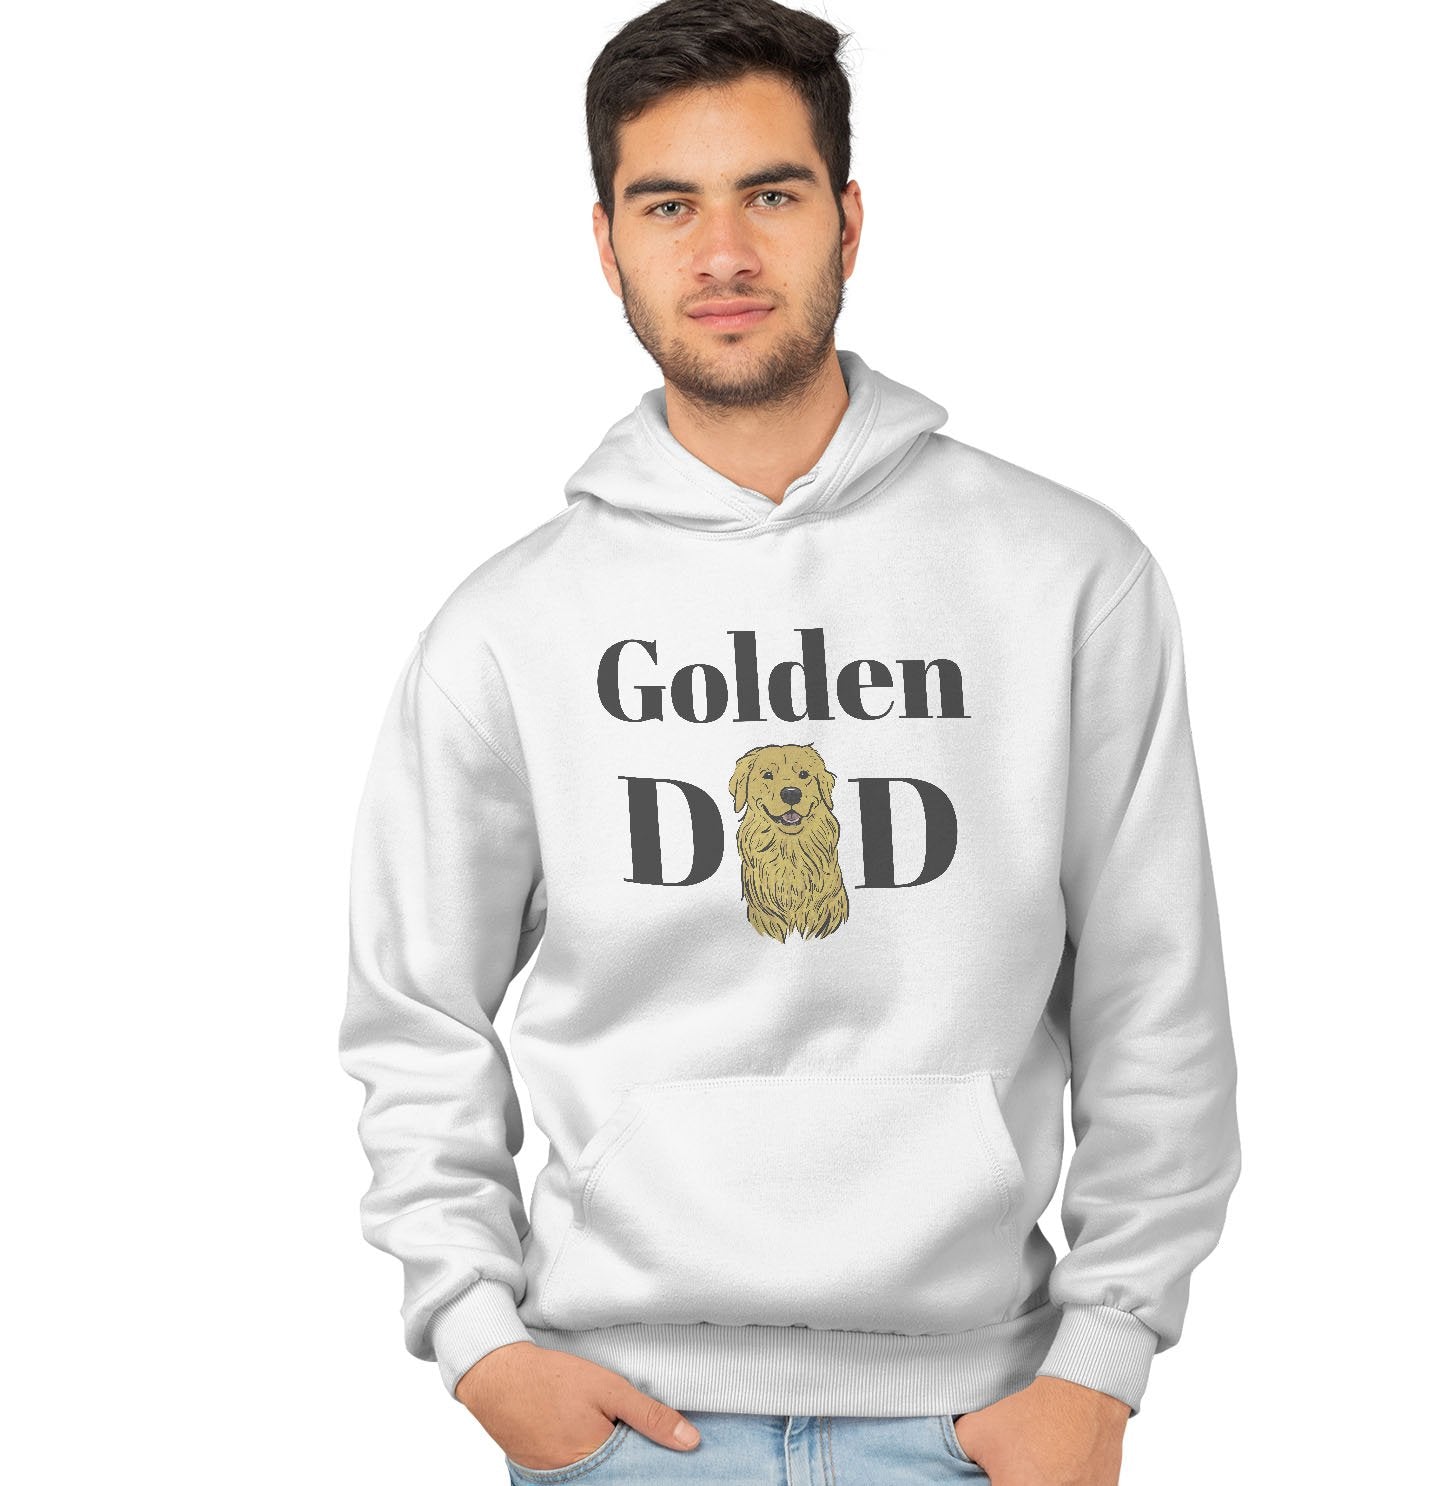 Animal Pride - Golden Dad Illustration - Adult Unisex Hoodie Sweatshirt